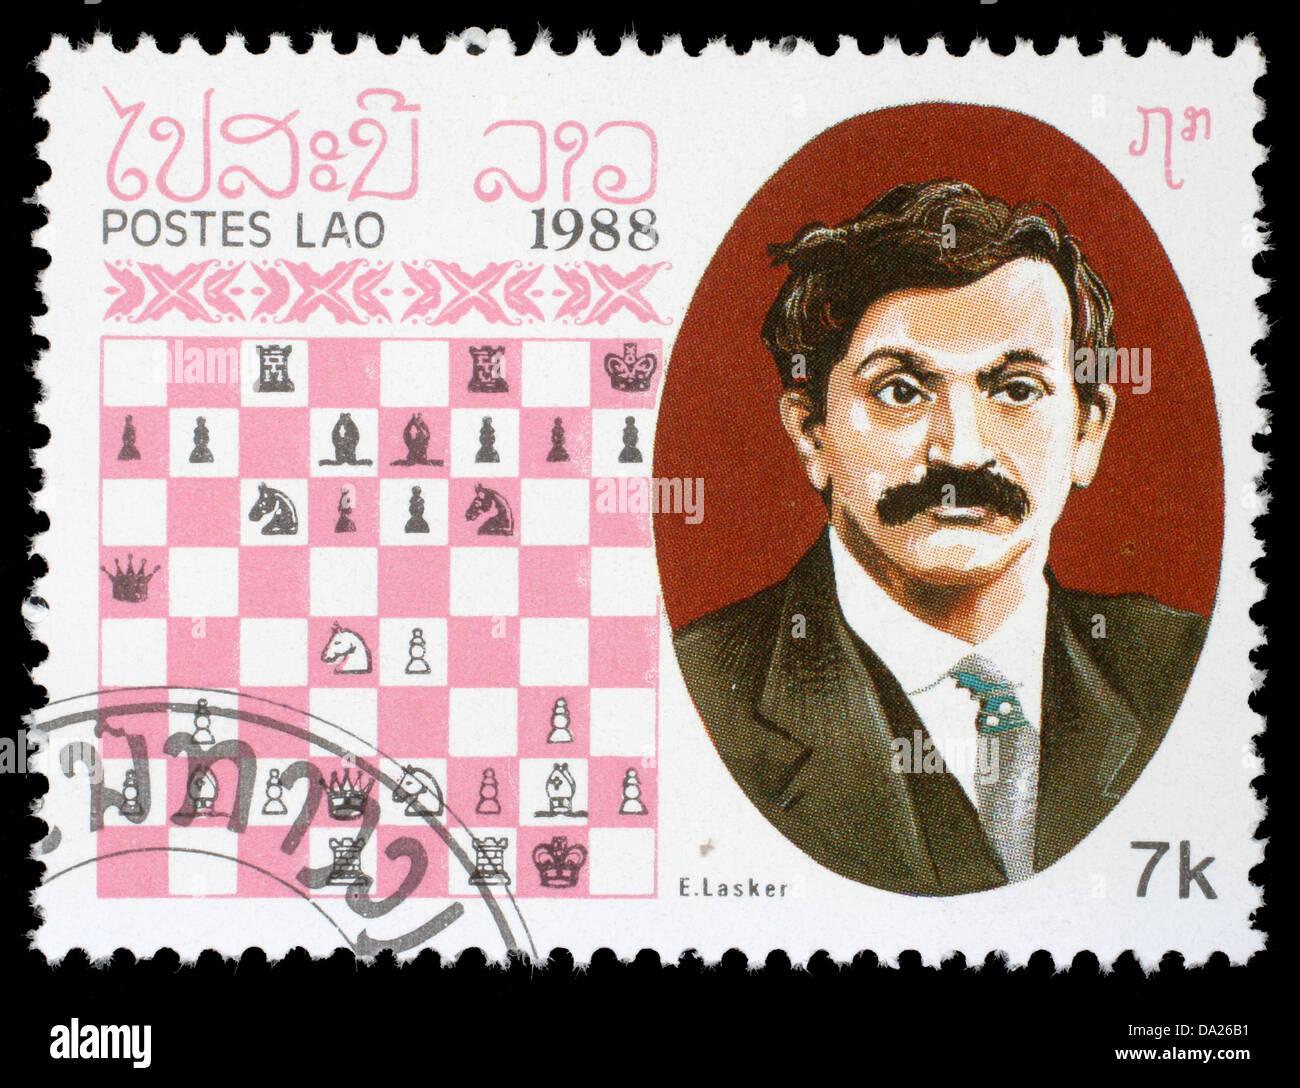 LAOS - CIRCA 1988: A stamp printed in Laos, shows E. Lasker, Chess Champion, circa 1988 Stock Photo